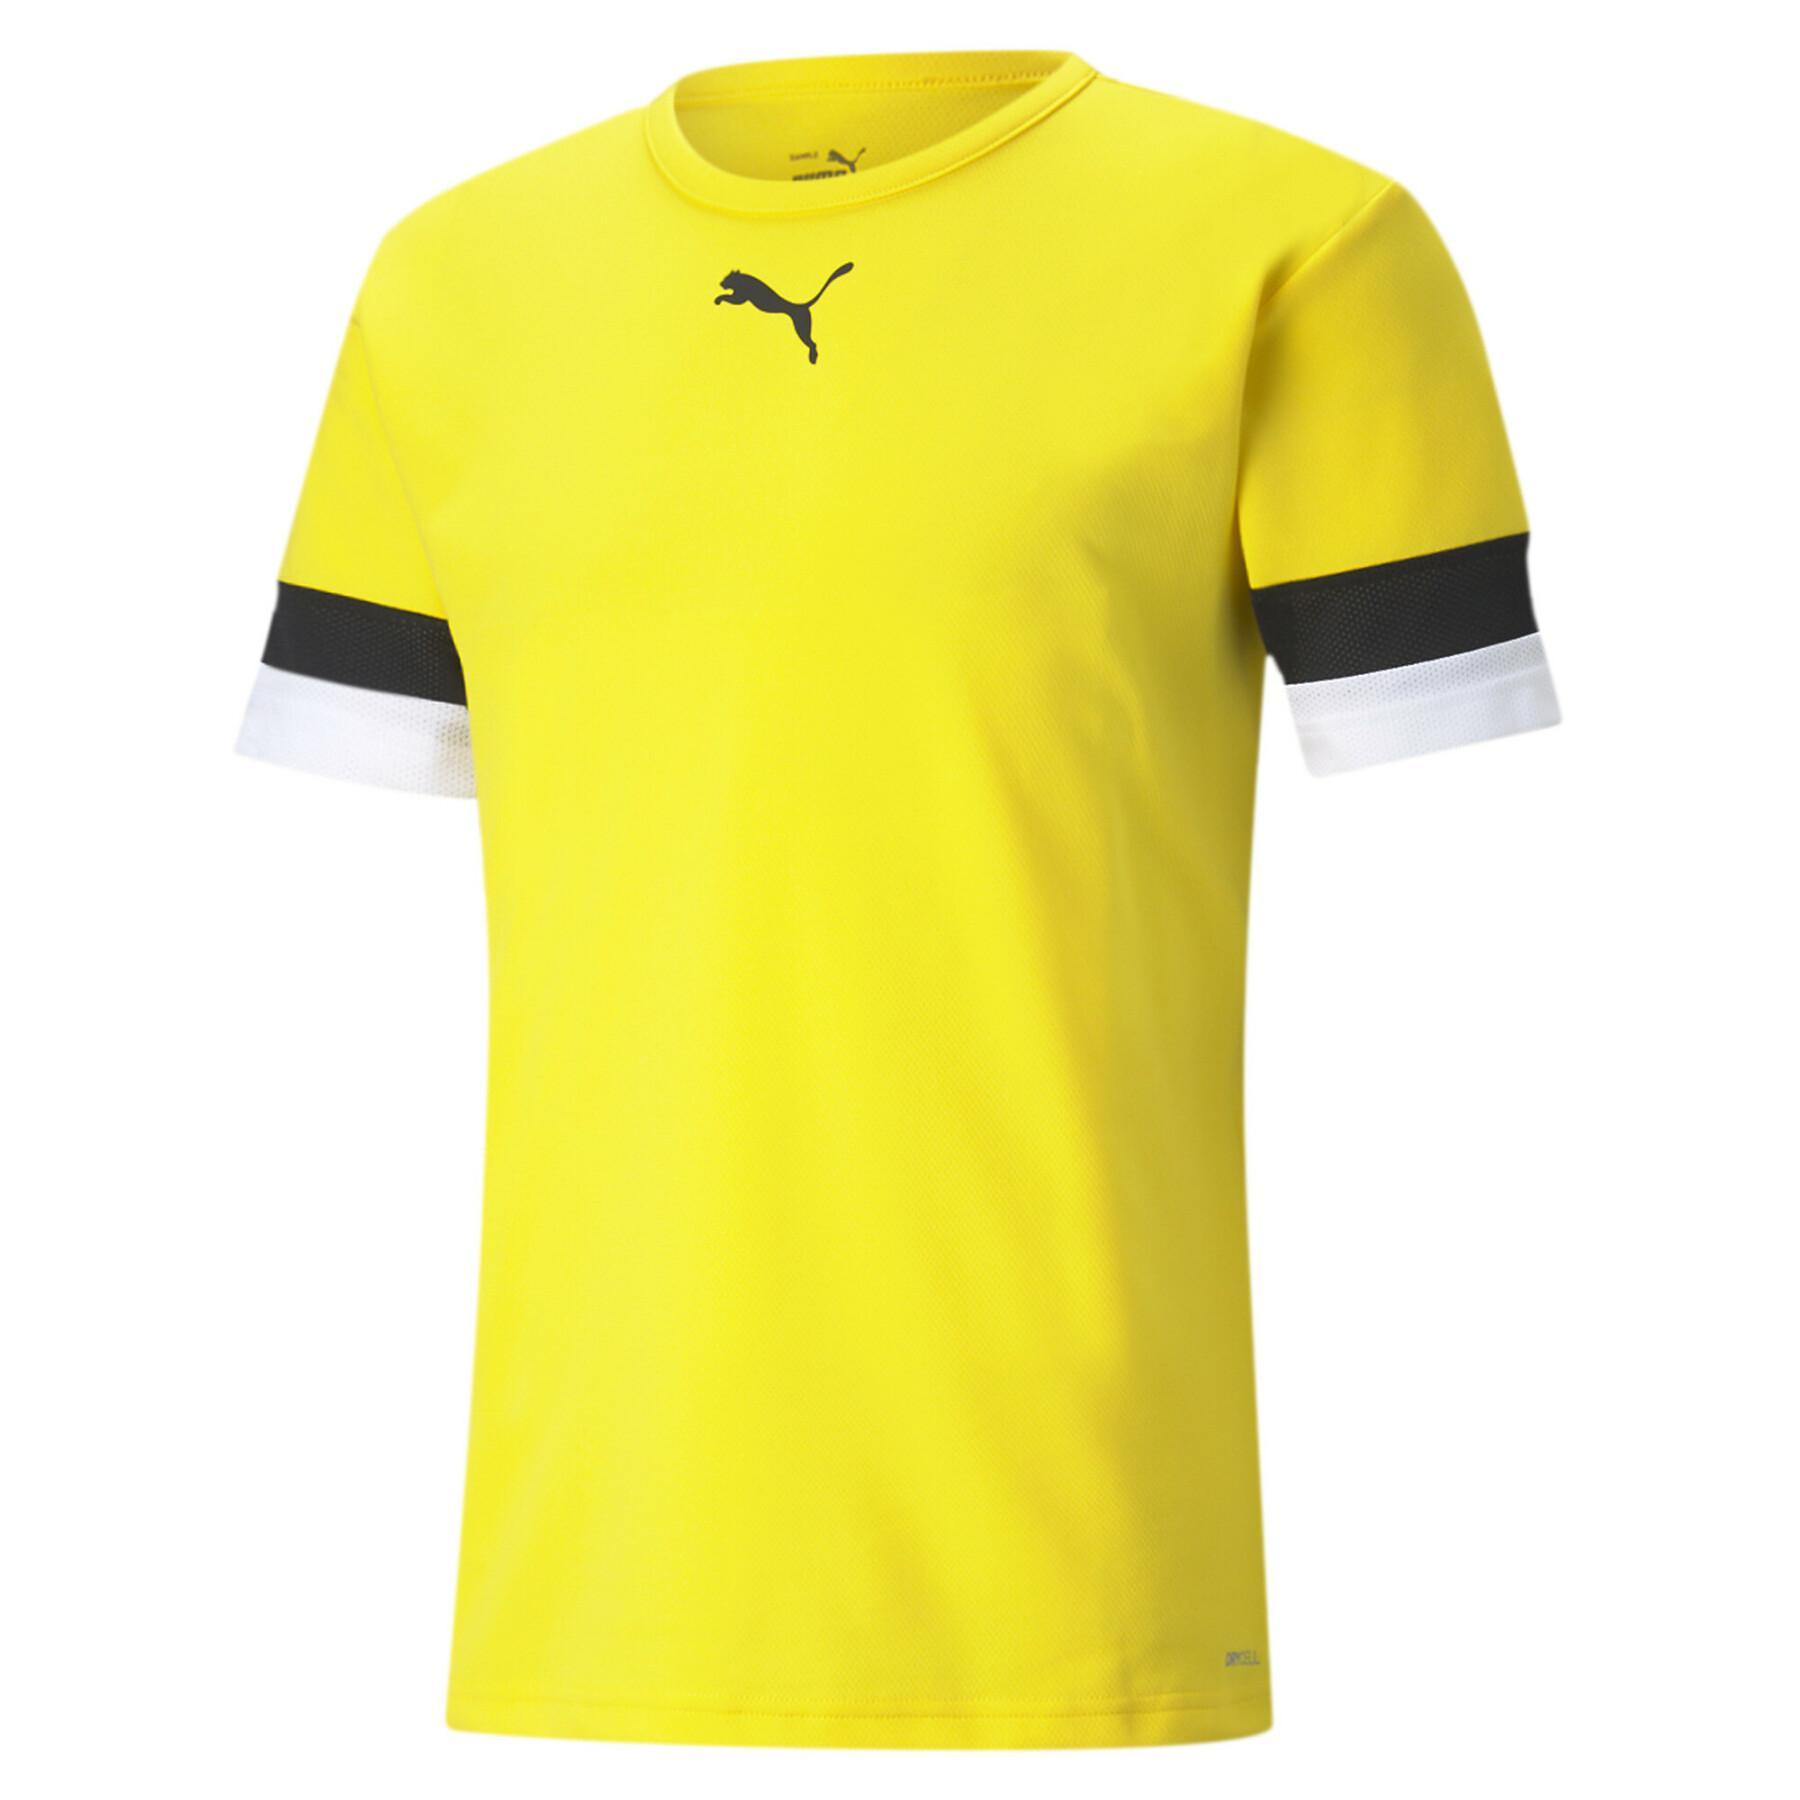 Camiseta Puma Team Rise - Puma - Camisetas de entrenamiento - Ropa de fútbol